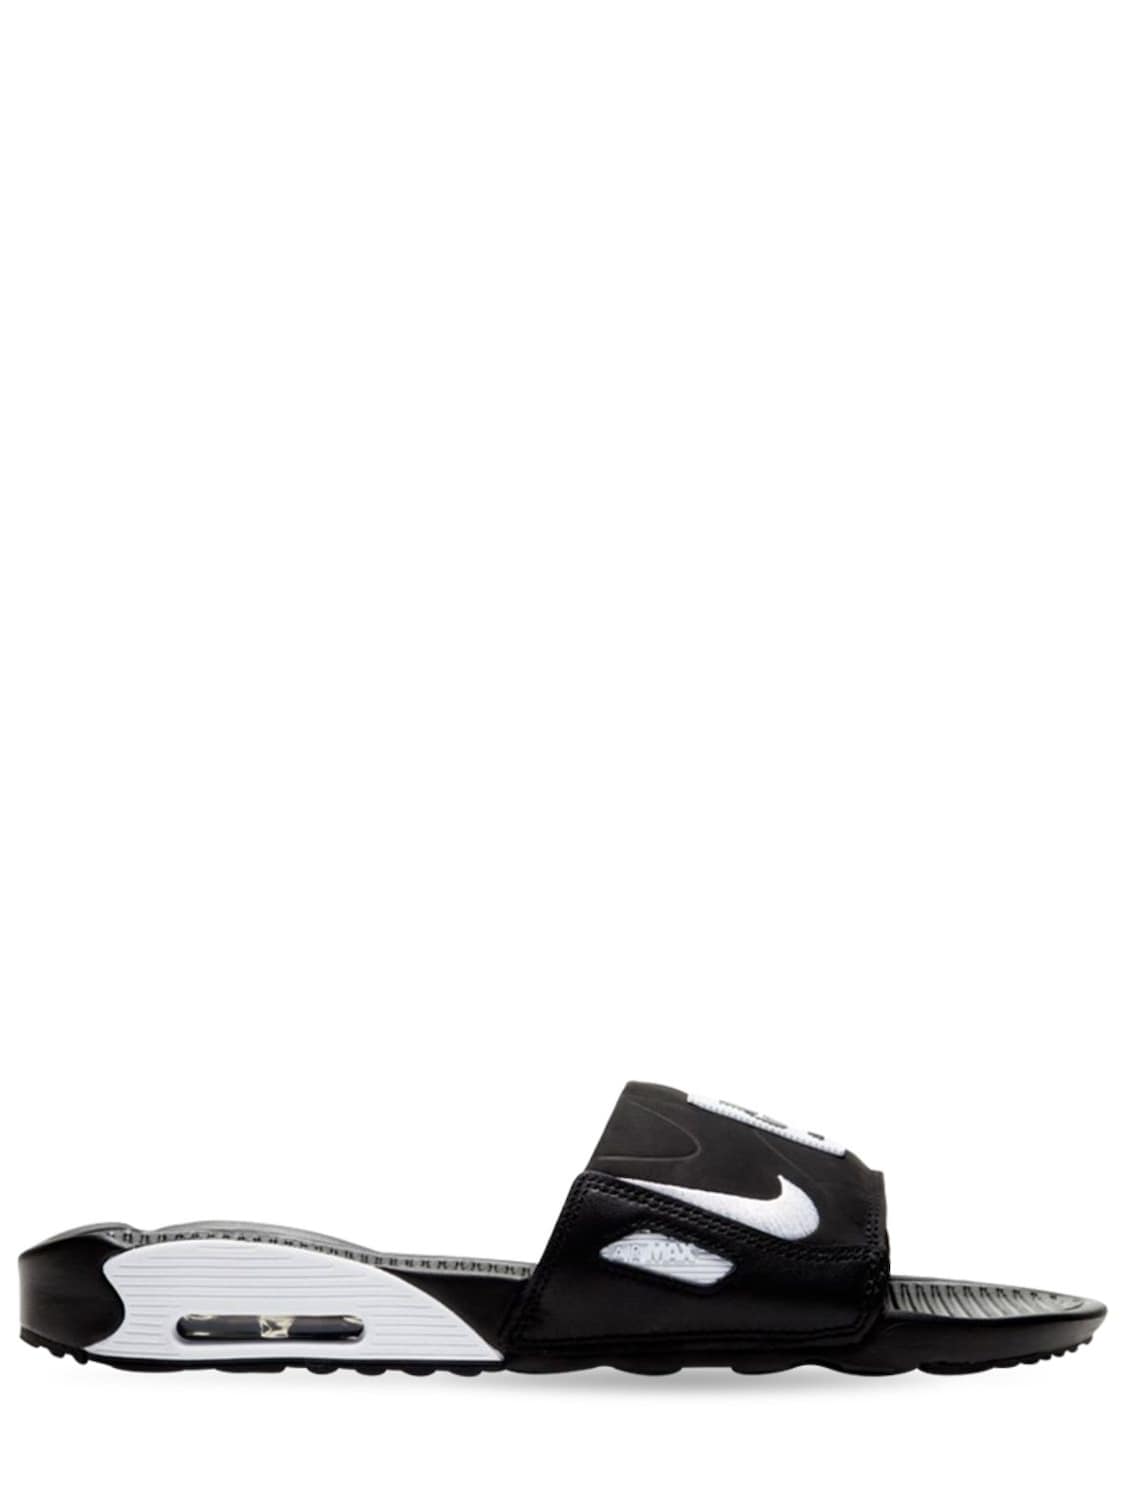 Nike Air Max 90' Slide Black White 